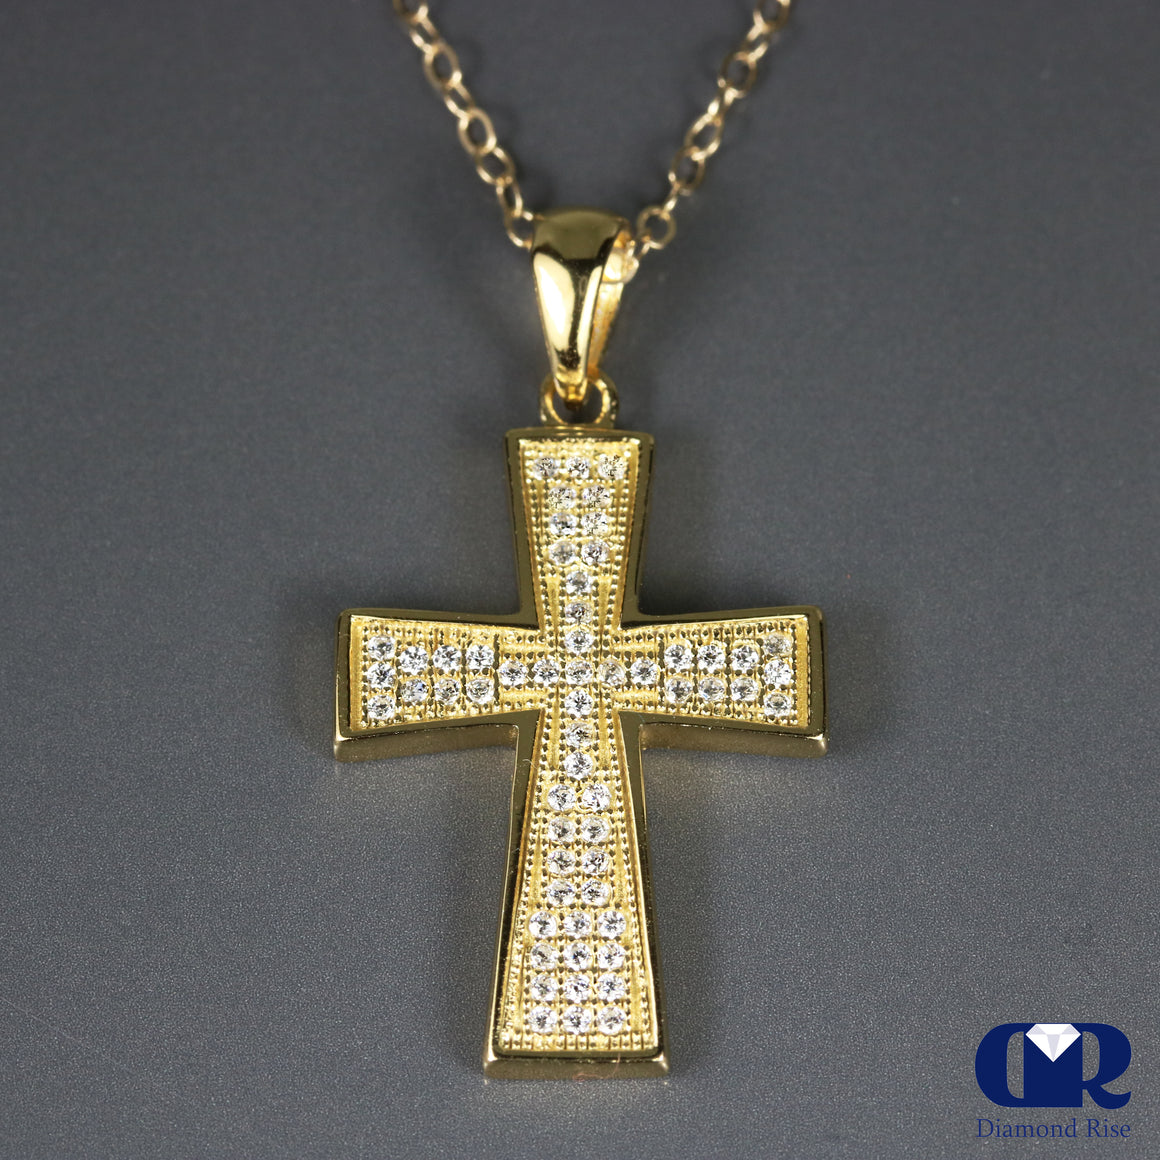 0.30 Carat Round Cut Diamond Cross Pendant Necklace In 14K Yellow Gold - Diamond Rise Jewelry